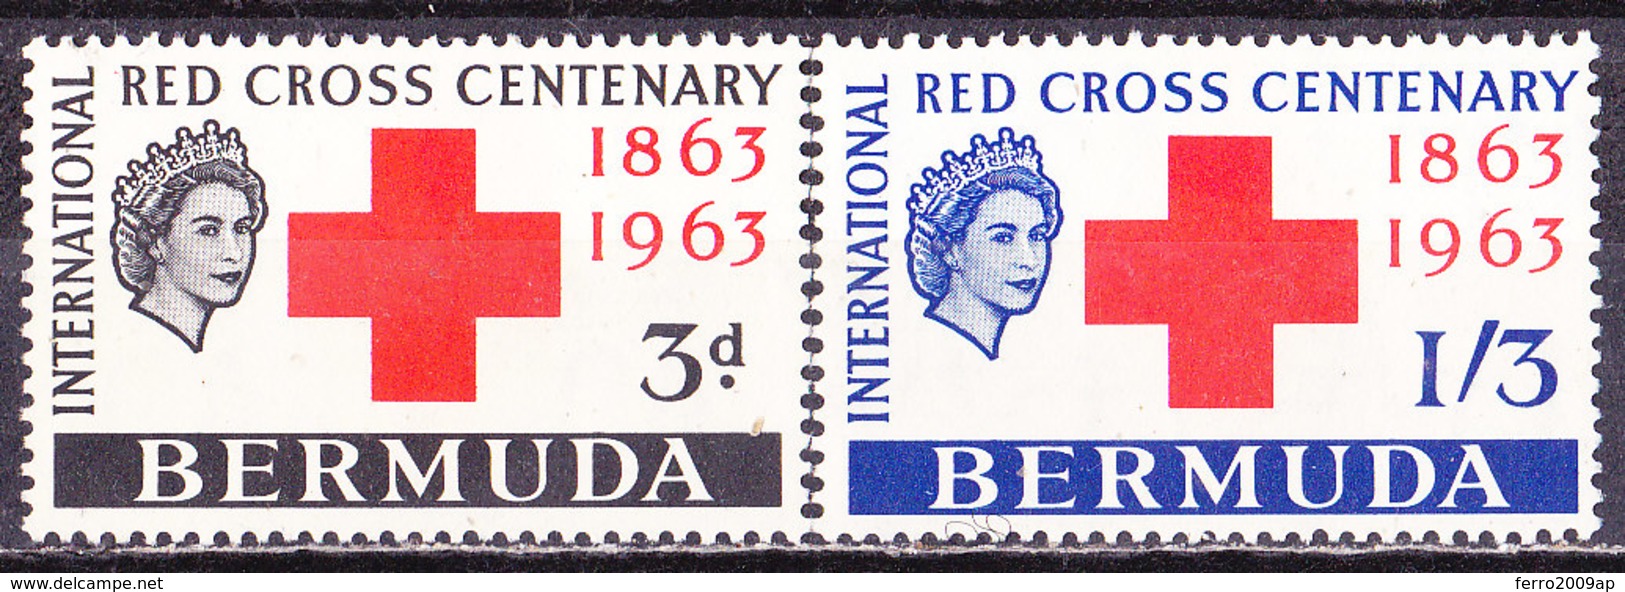 Croce Rossa-Bermuda 1963-Serie Completa Nuova MNH** - Croce Rossa